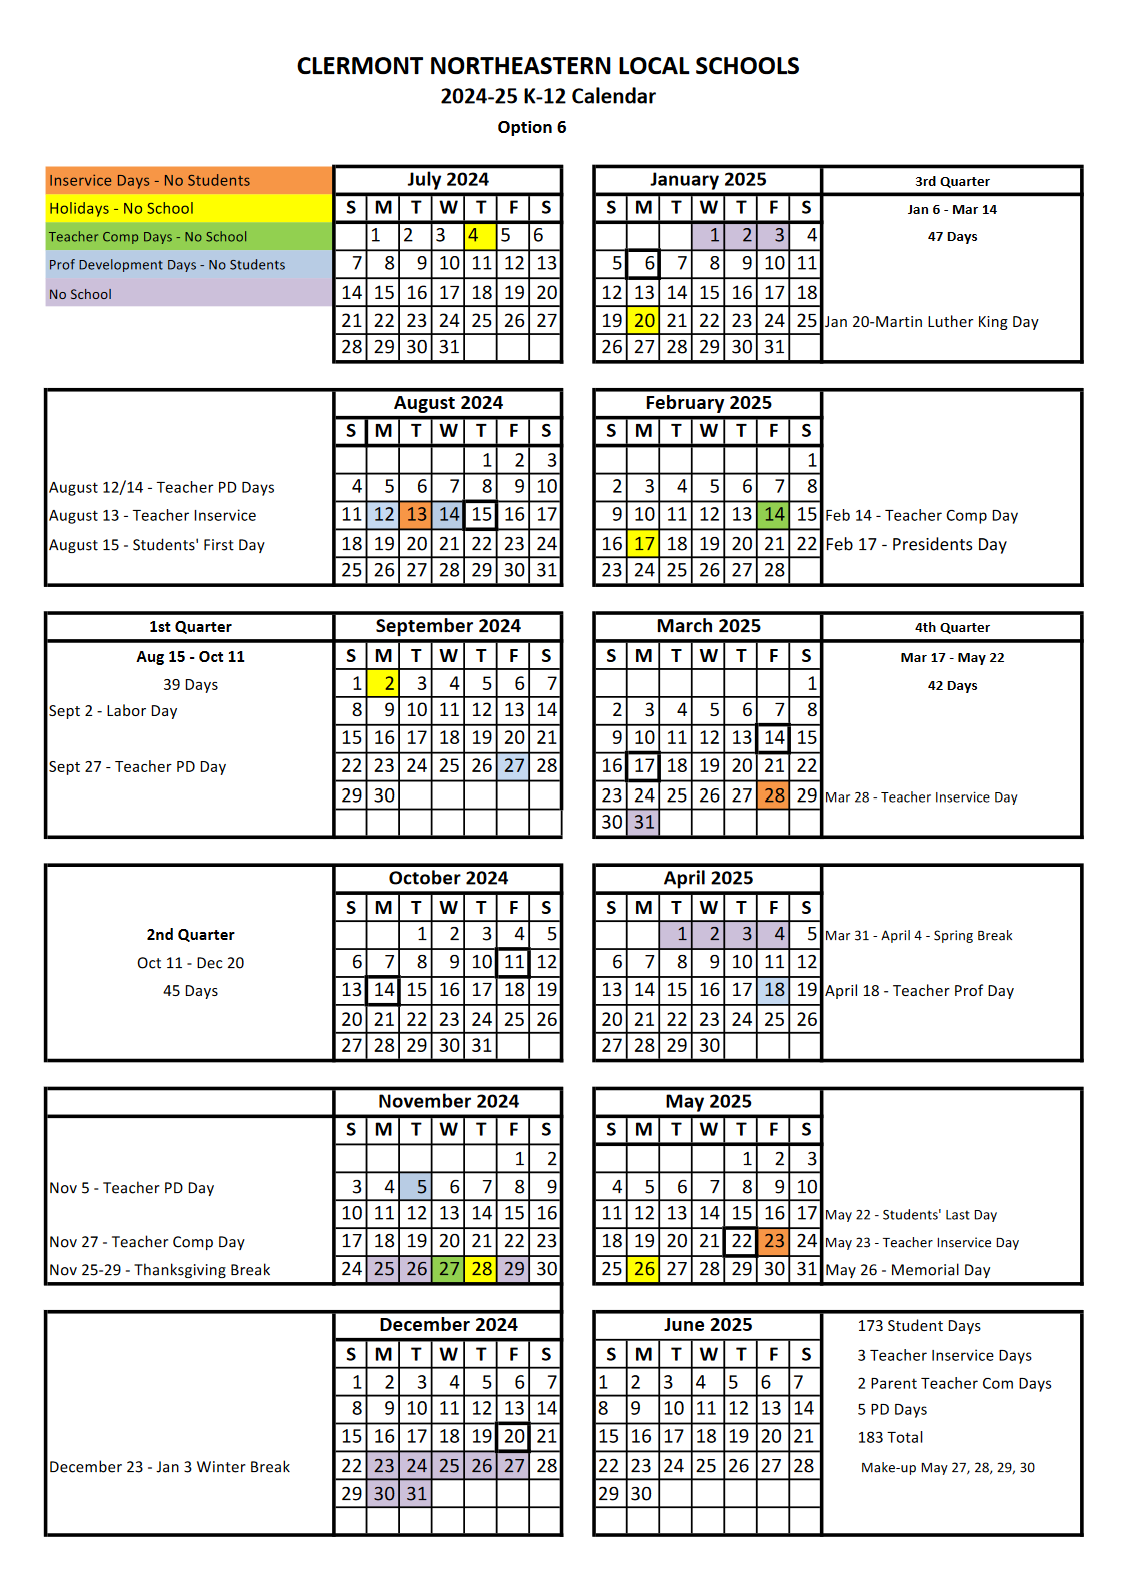 24-25 calendar 